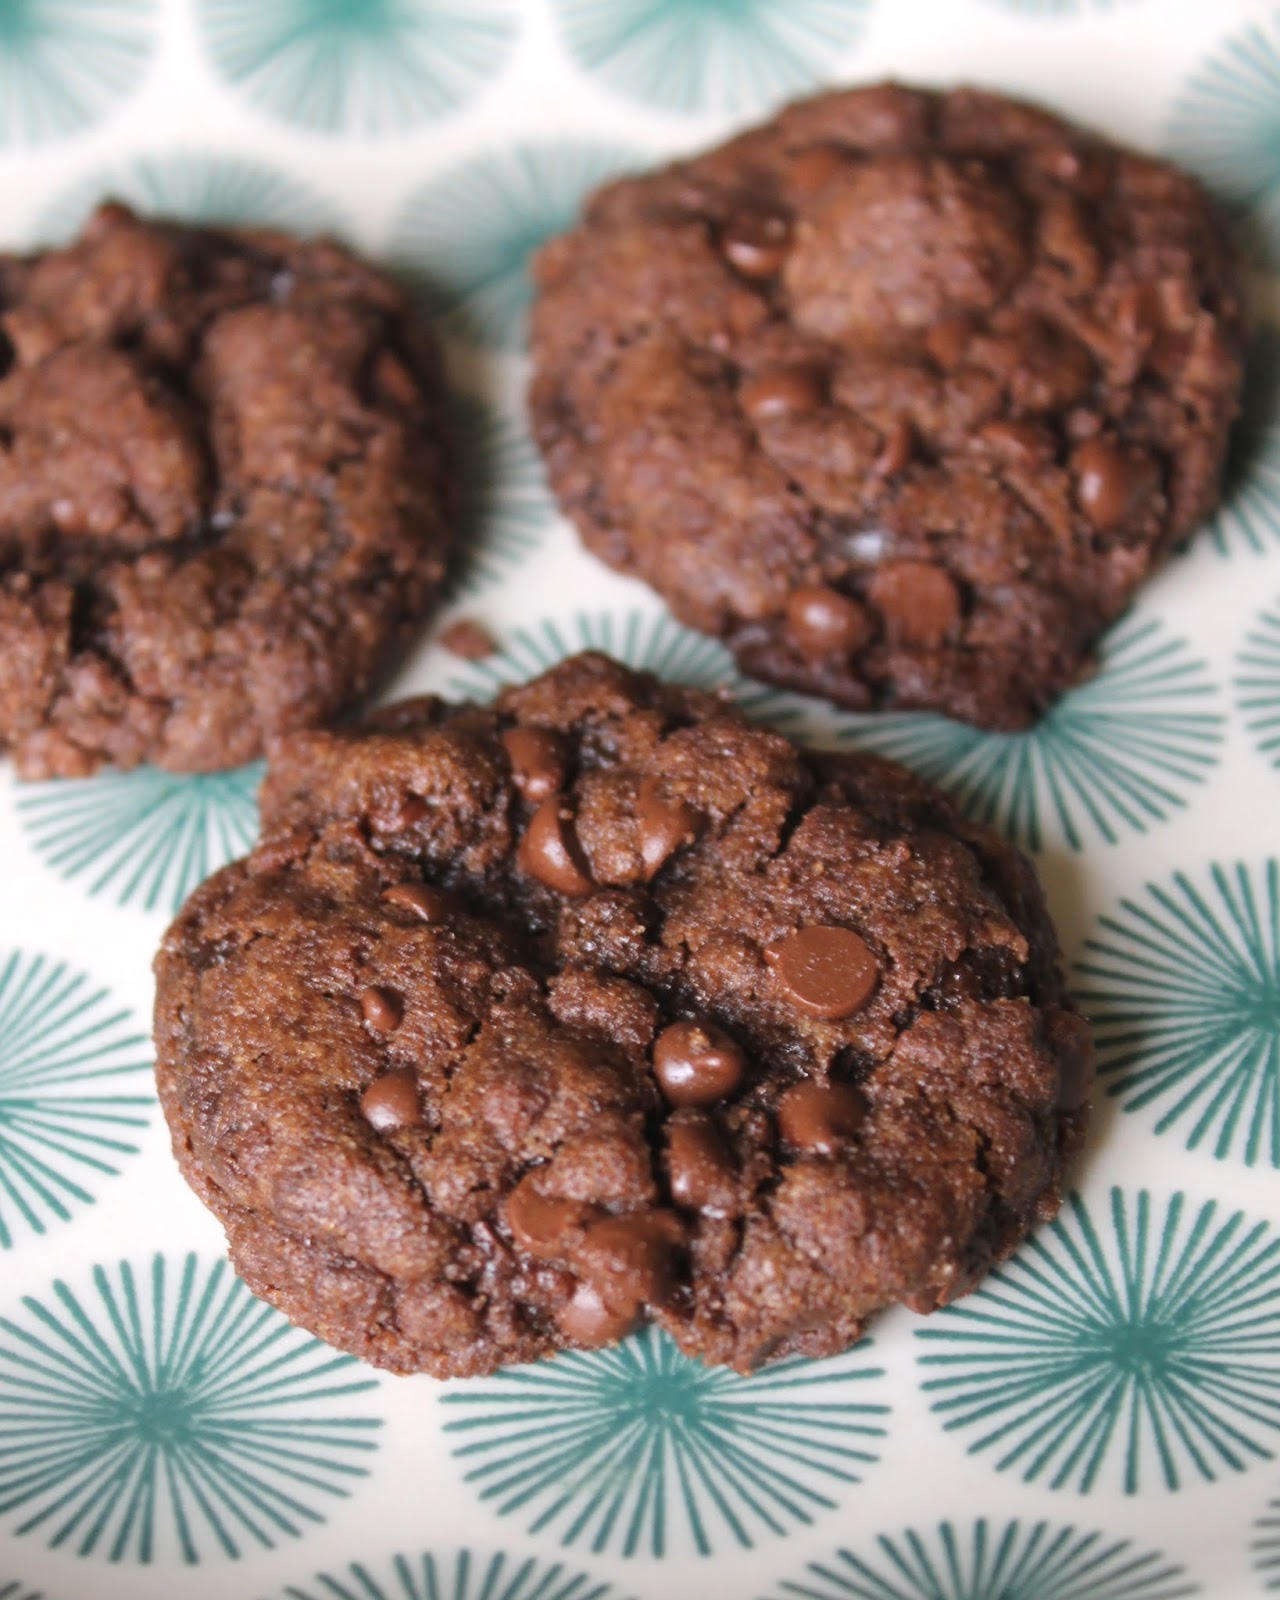 Auntie Bethany - The Best Gluten Free: Gluten Free/Vegan Chocolate Cookies